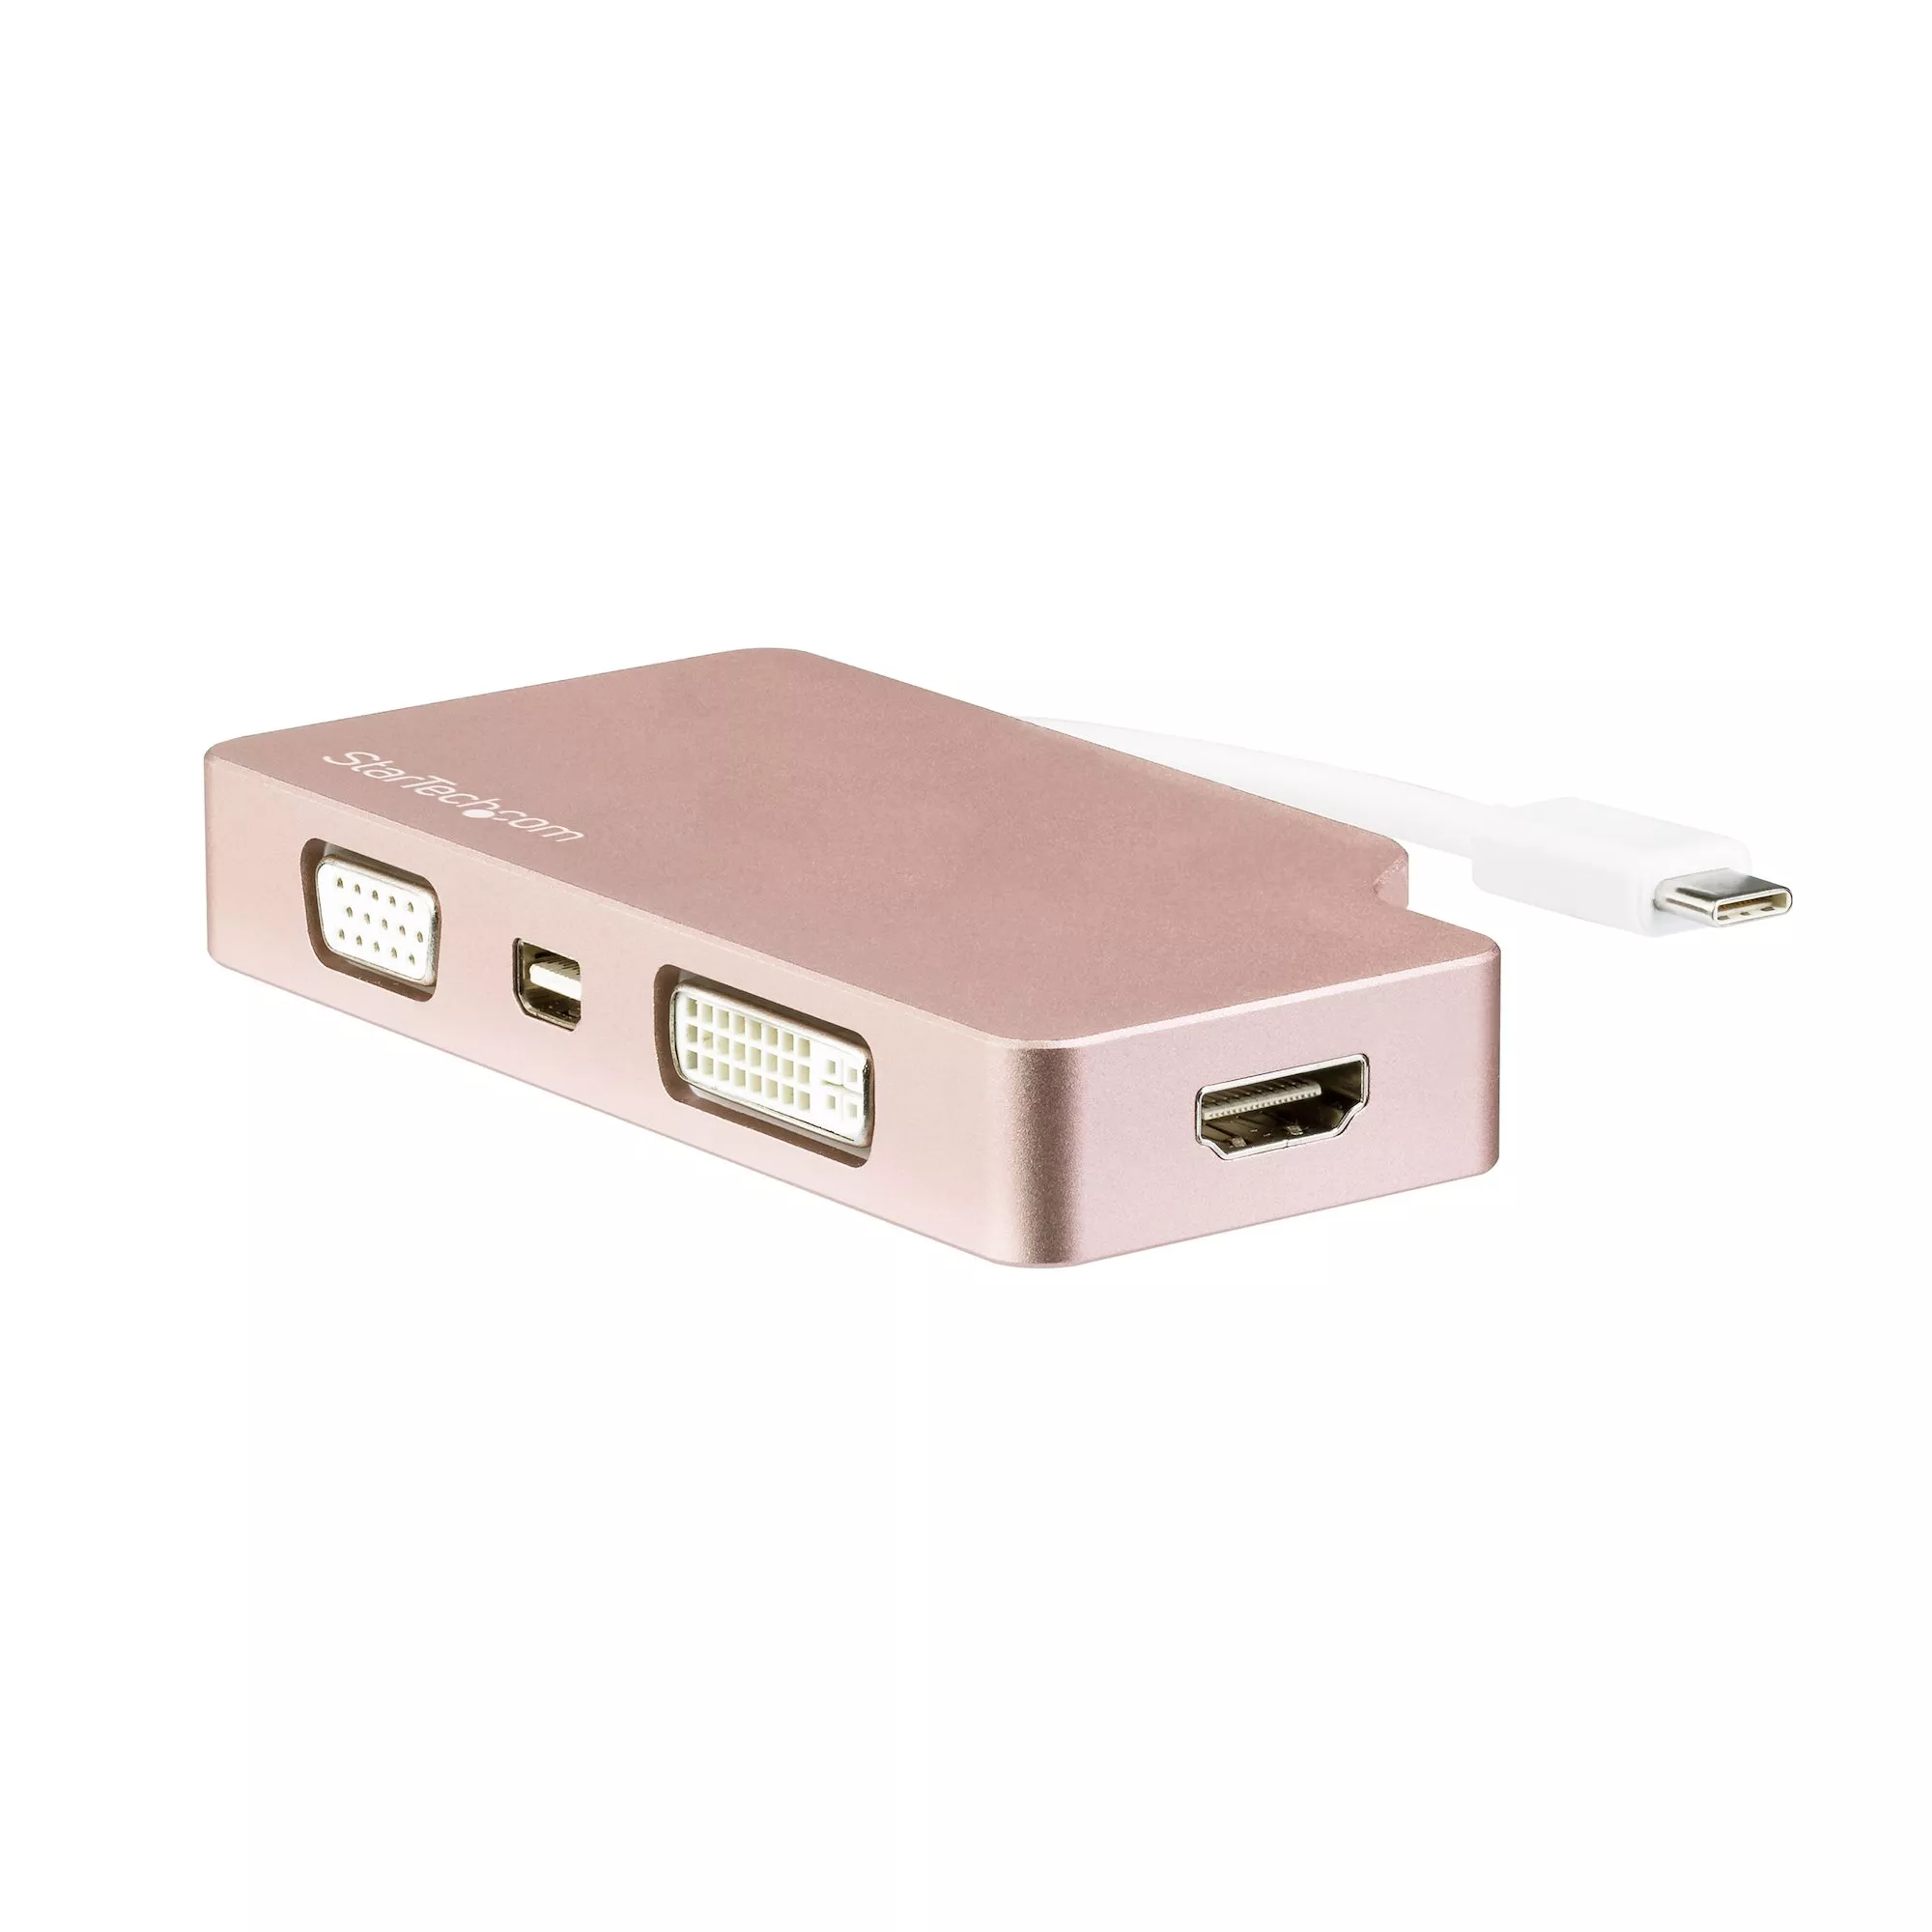 Vente Câble HDMI StarTech.com Adaptateur multiport USB-C - Or rose - 4-en-1